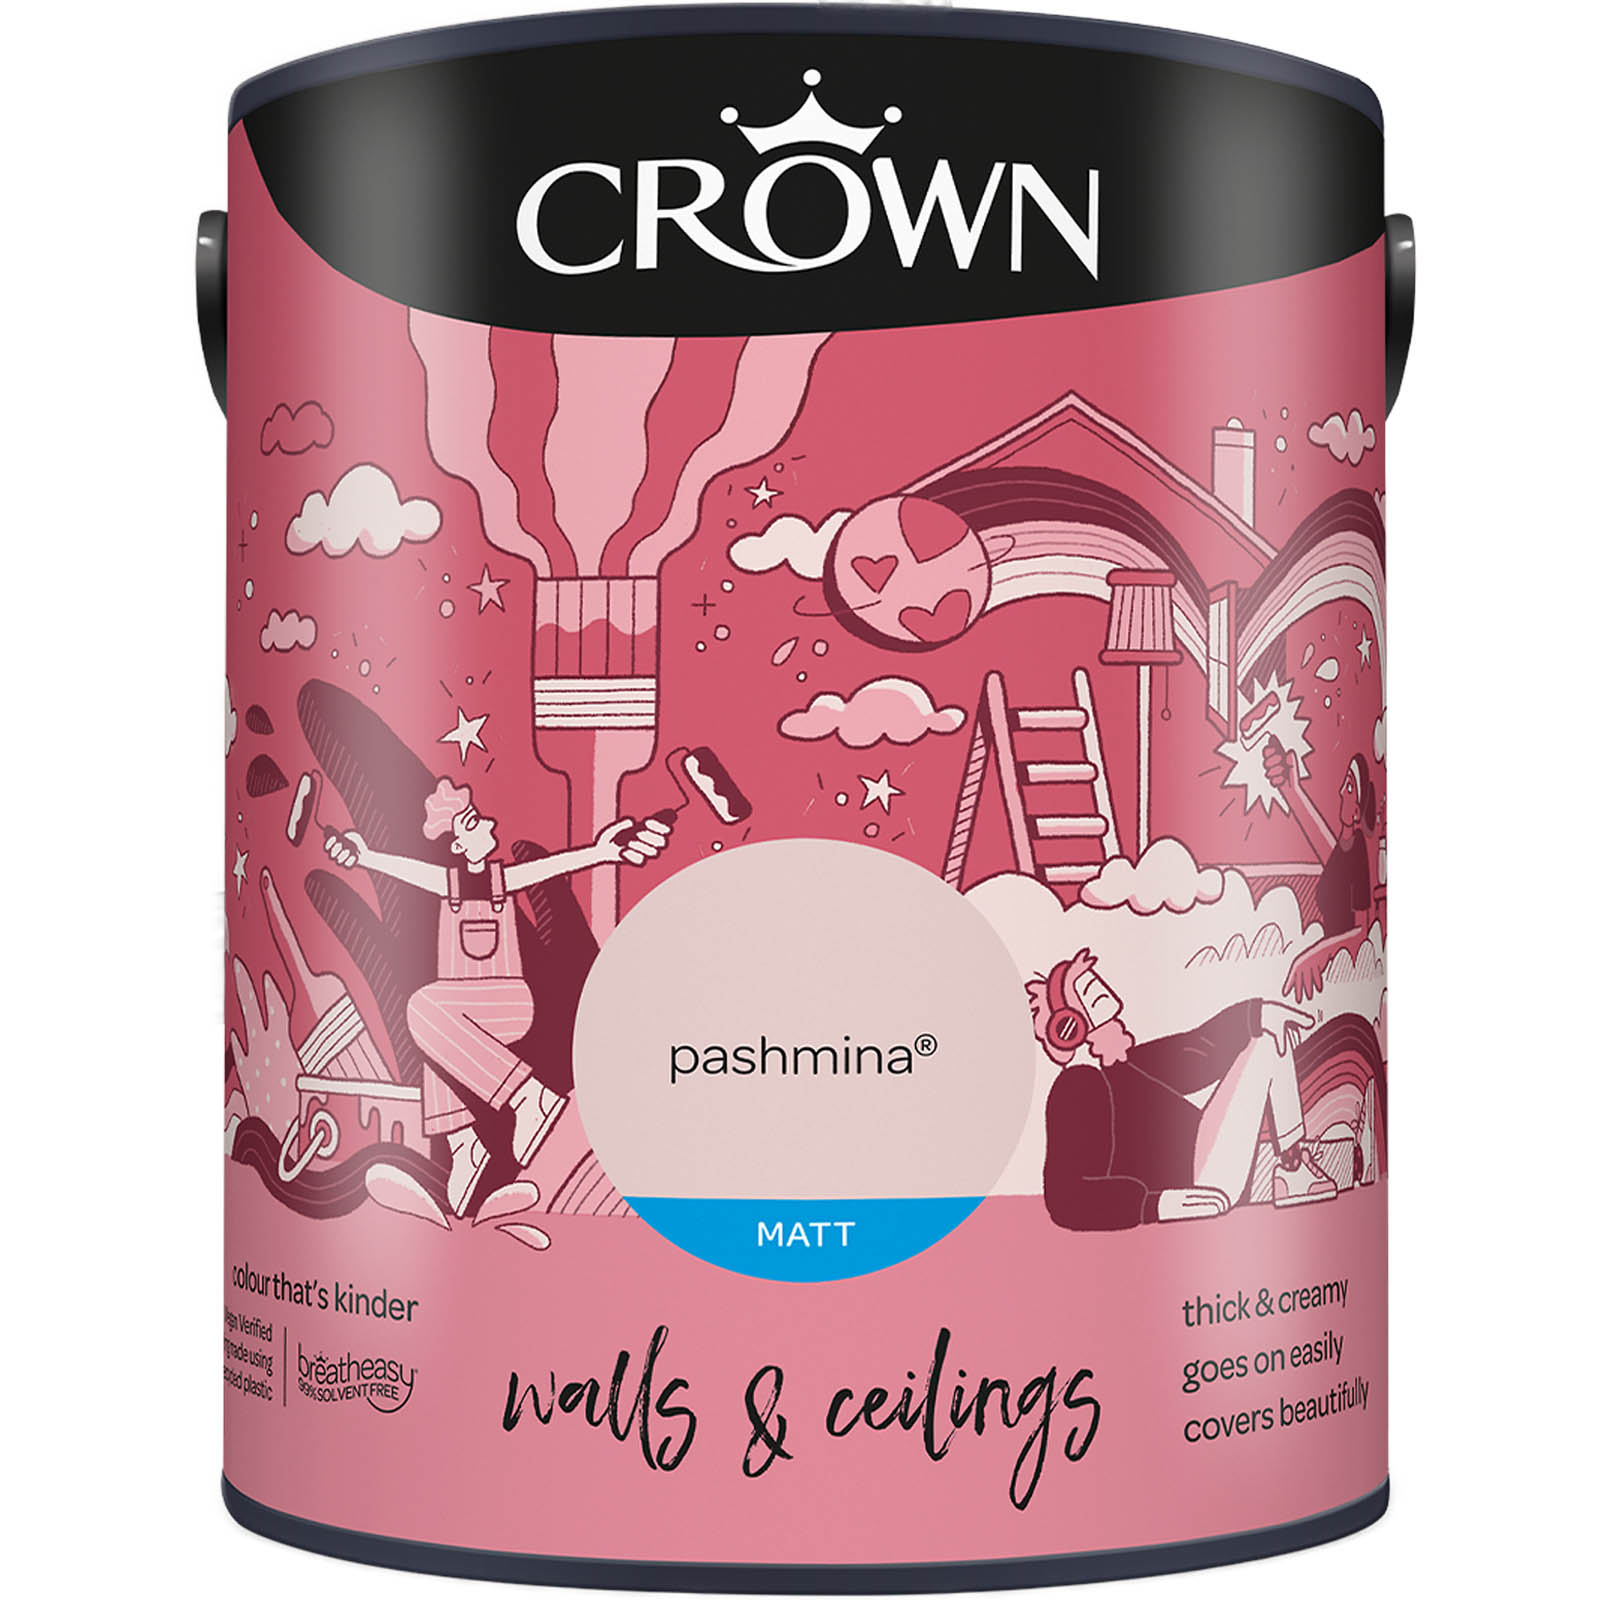 Crown Breatheasy Walls & Ceilings Pashmina Matt Emulsion Paint 5L Image 2